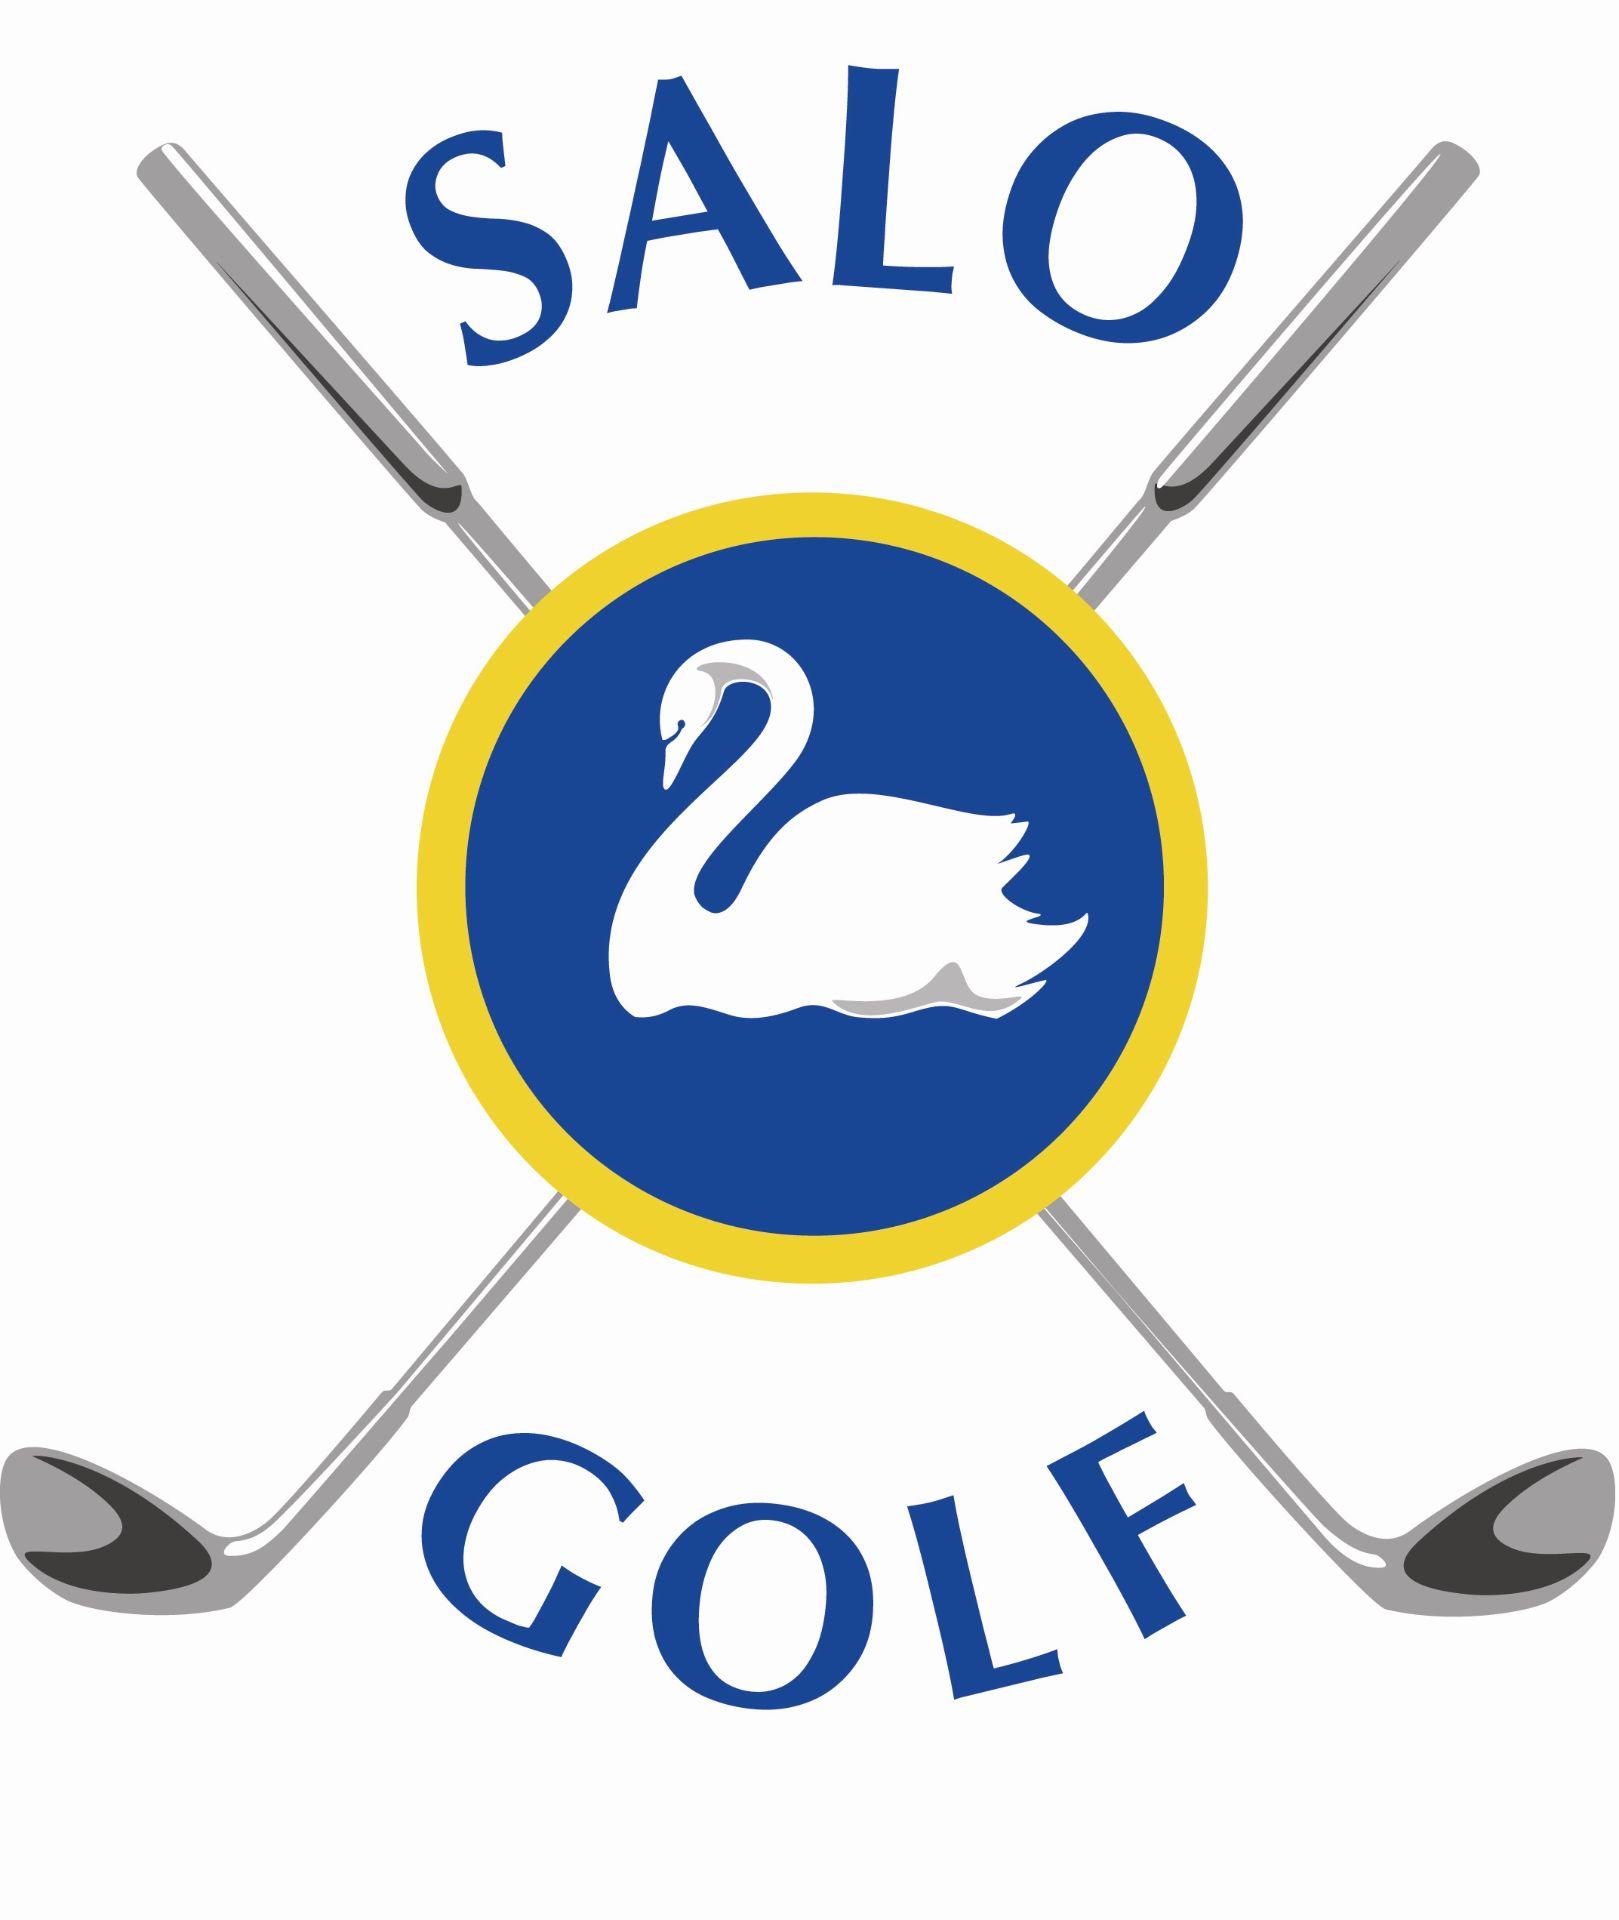 Salo Golf logo